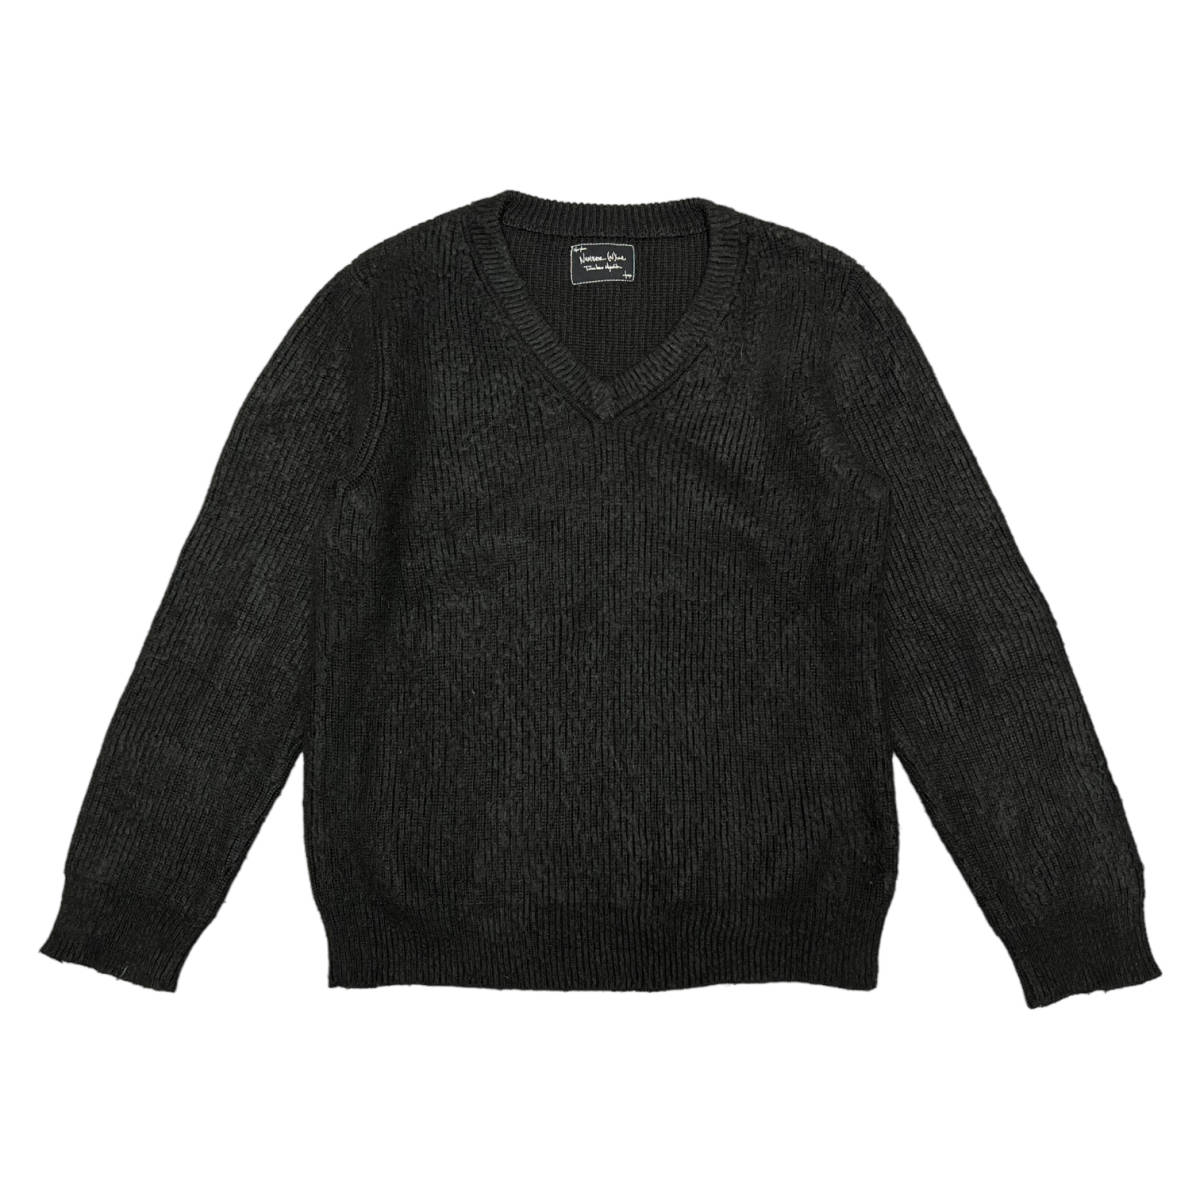 EF17）希少 ナンバーナイン 03ss/aw ニット ブラック size:2 / ブルゾンジャケットコートシャツパンツデニムパーカースウェット